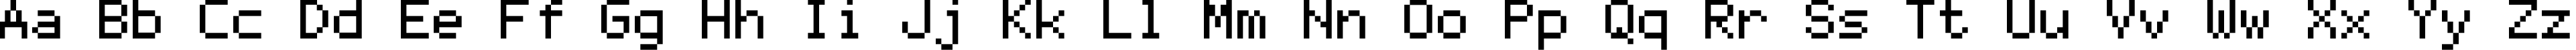 Пример написания английского алфавита шрифтом mono 07_55